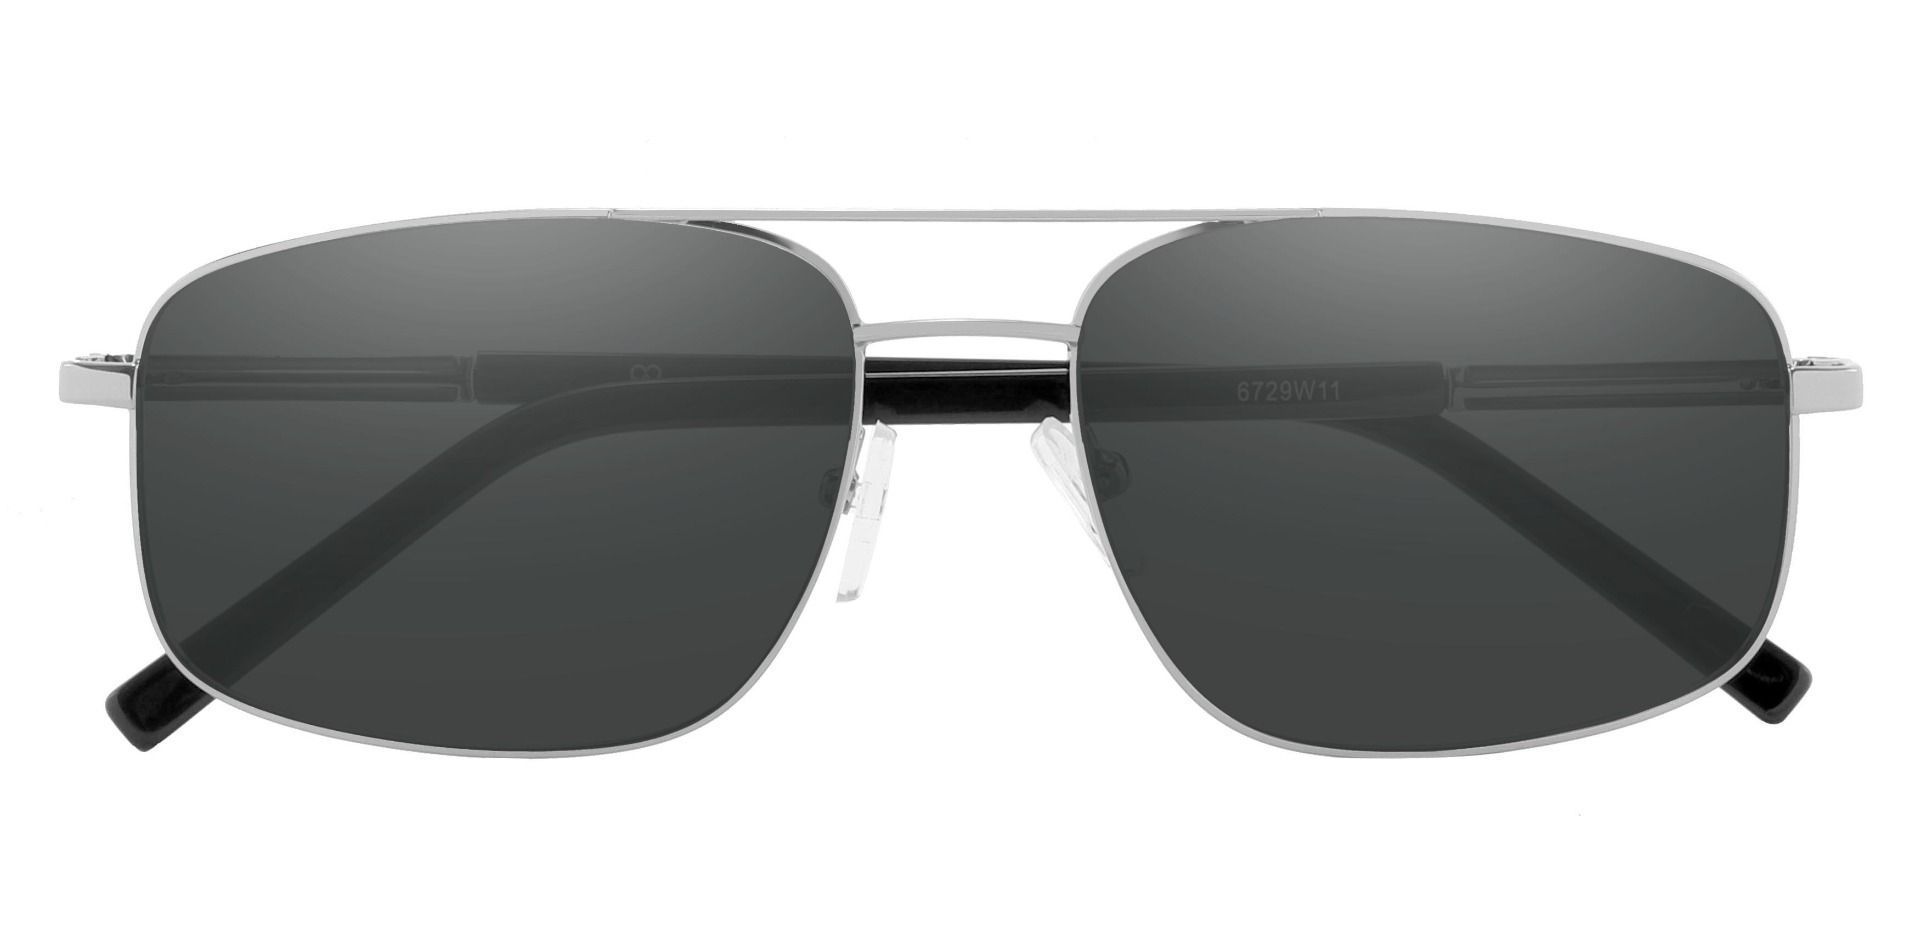 Davenport Aviator Lined Bifocal Sunglasses - Silver Frame With Gray Lenses